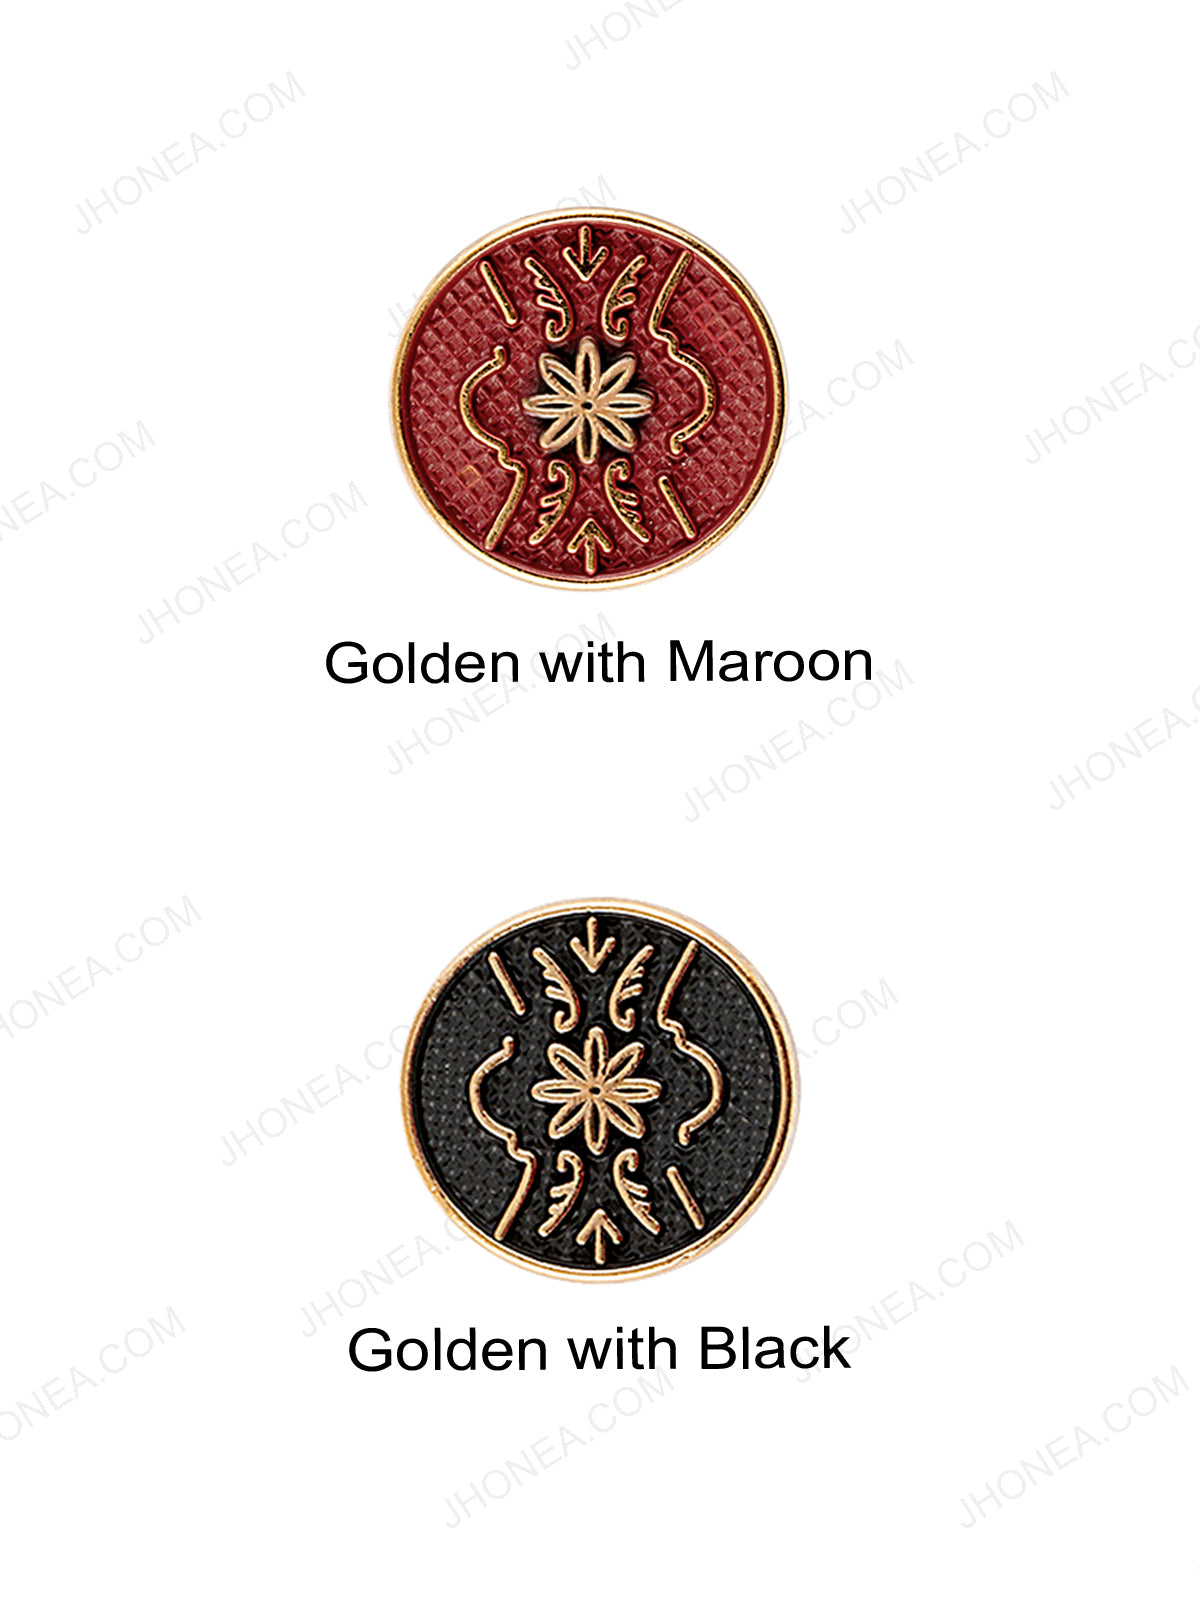 Matte Gold Engraved Design Coat Button